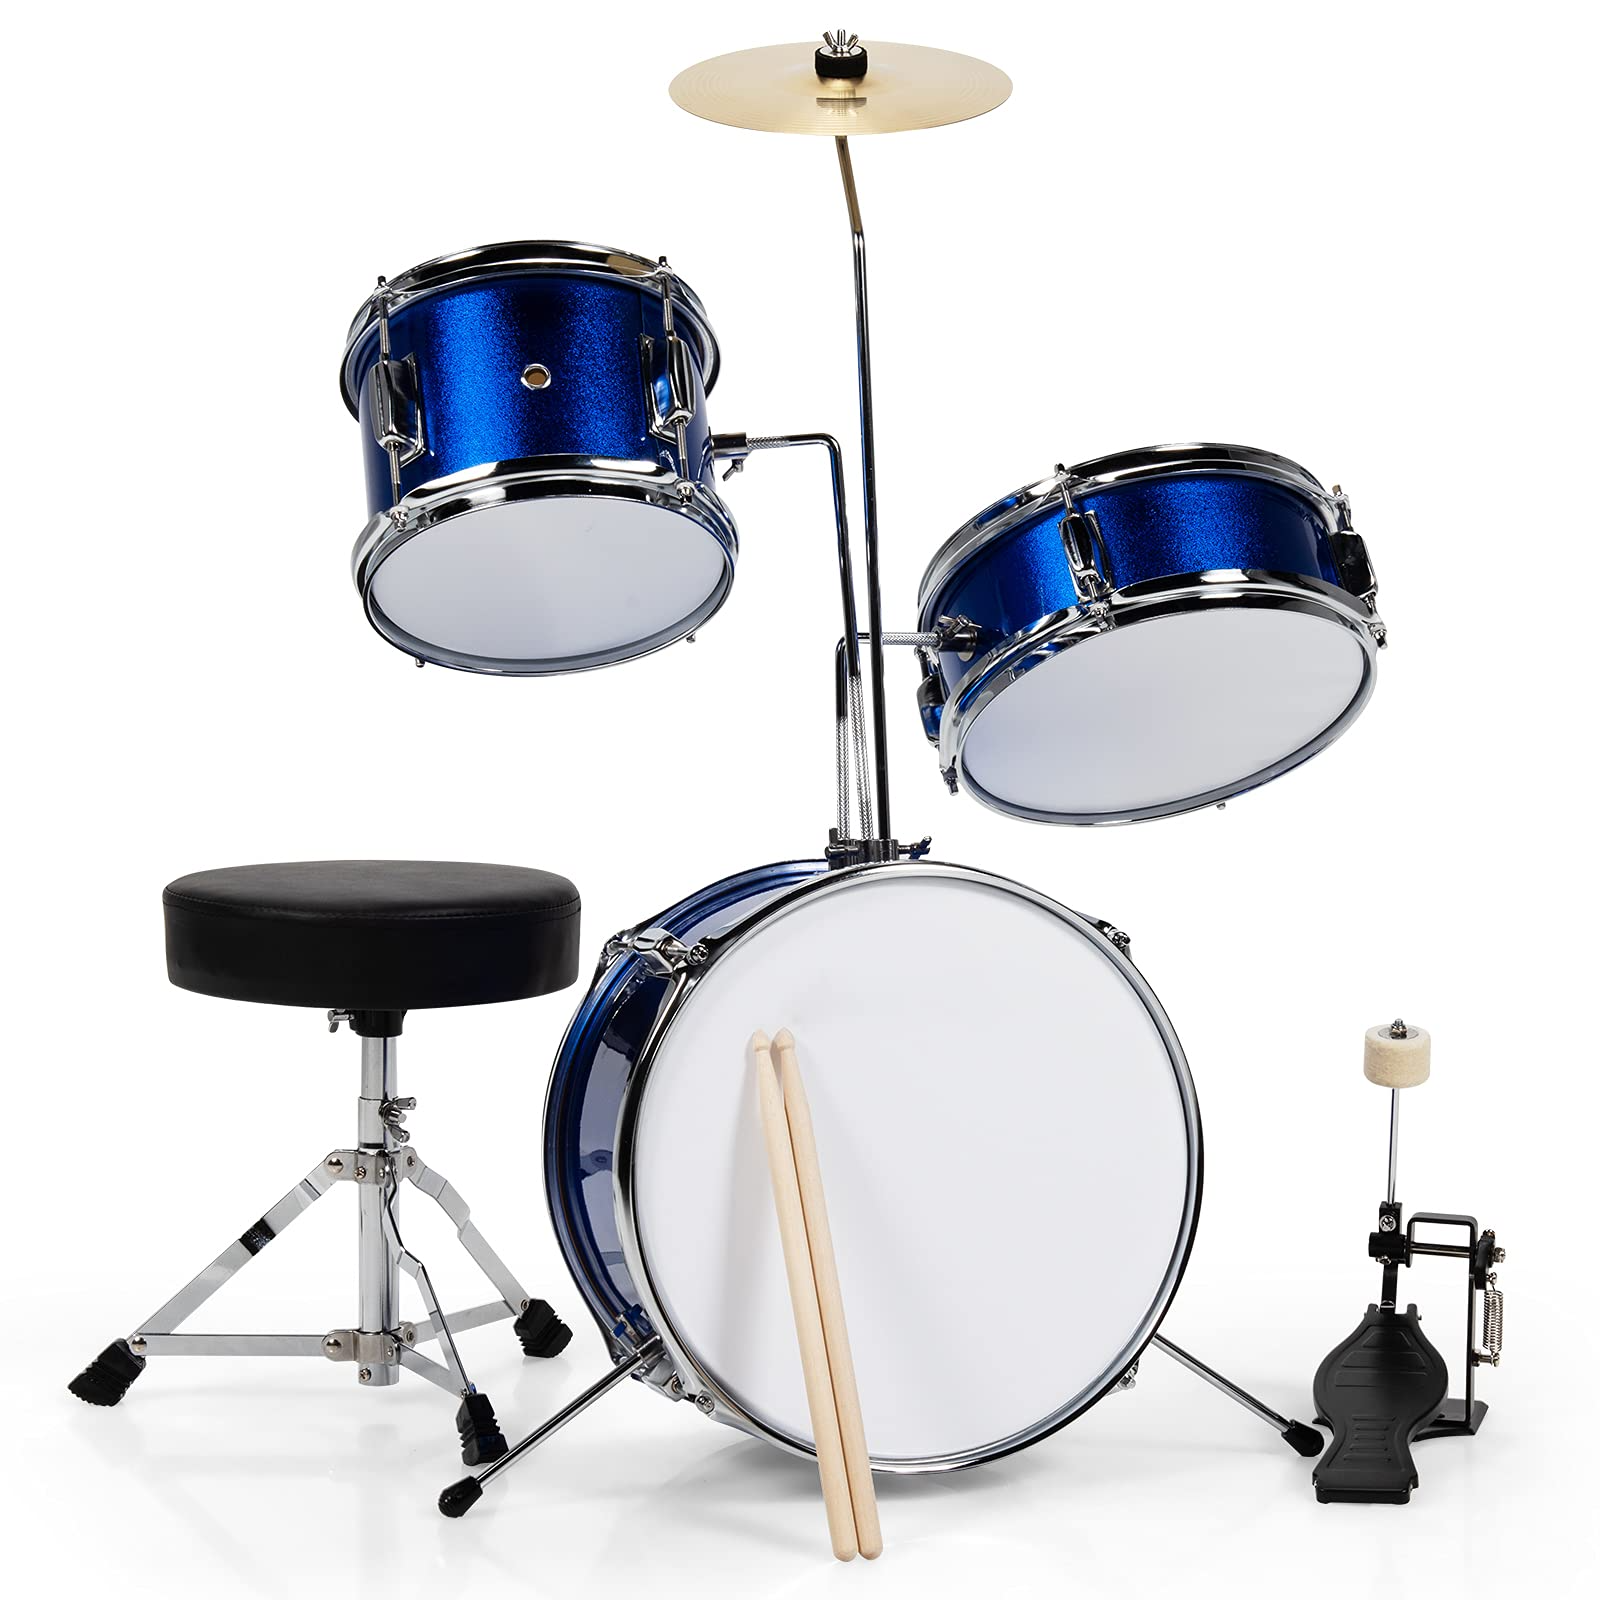 Costzon 3-Piece Kids Drum Set, 13 inch Junior Drum Set with 3 Drums (Bass Snare Tom)